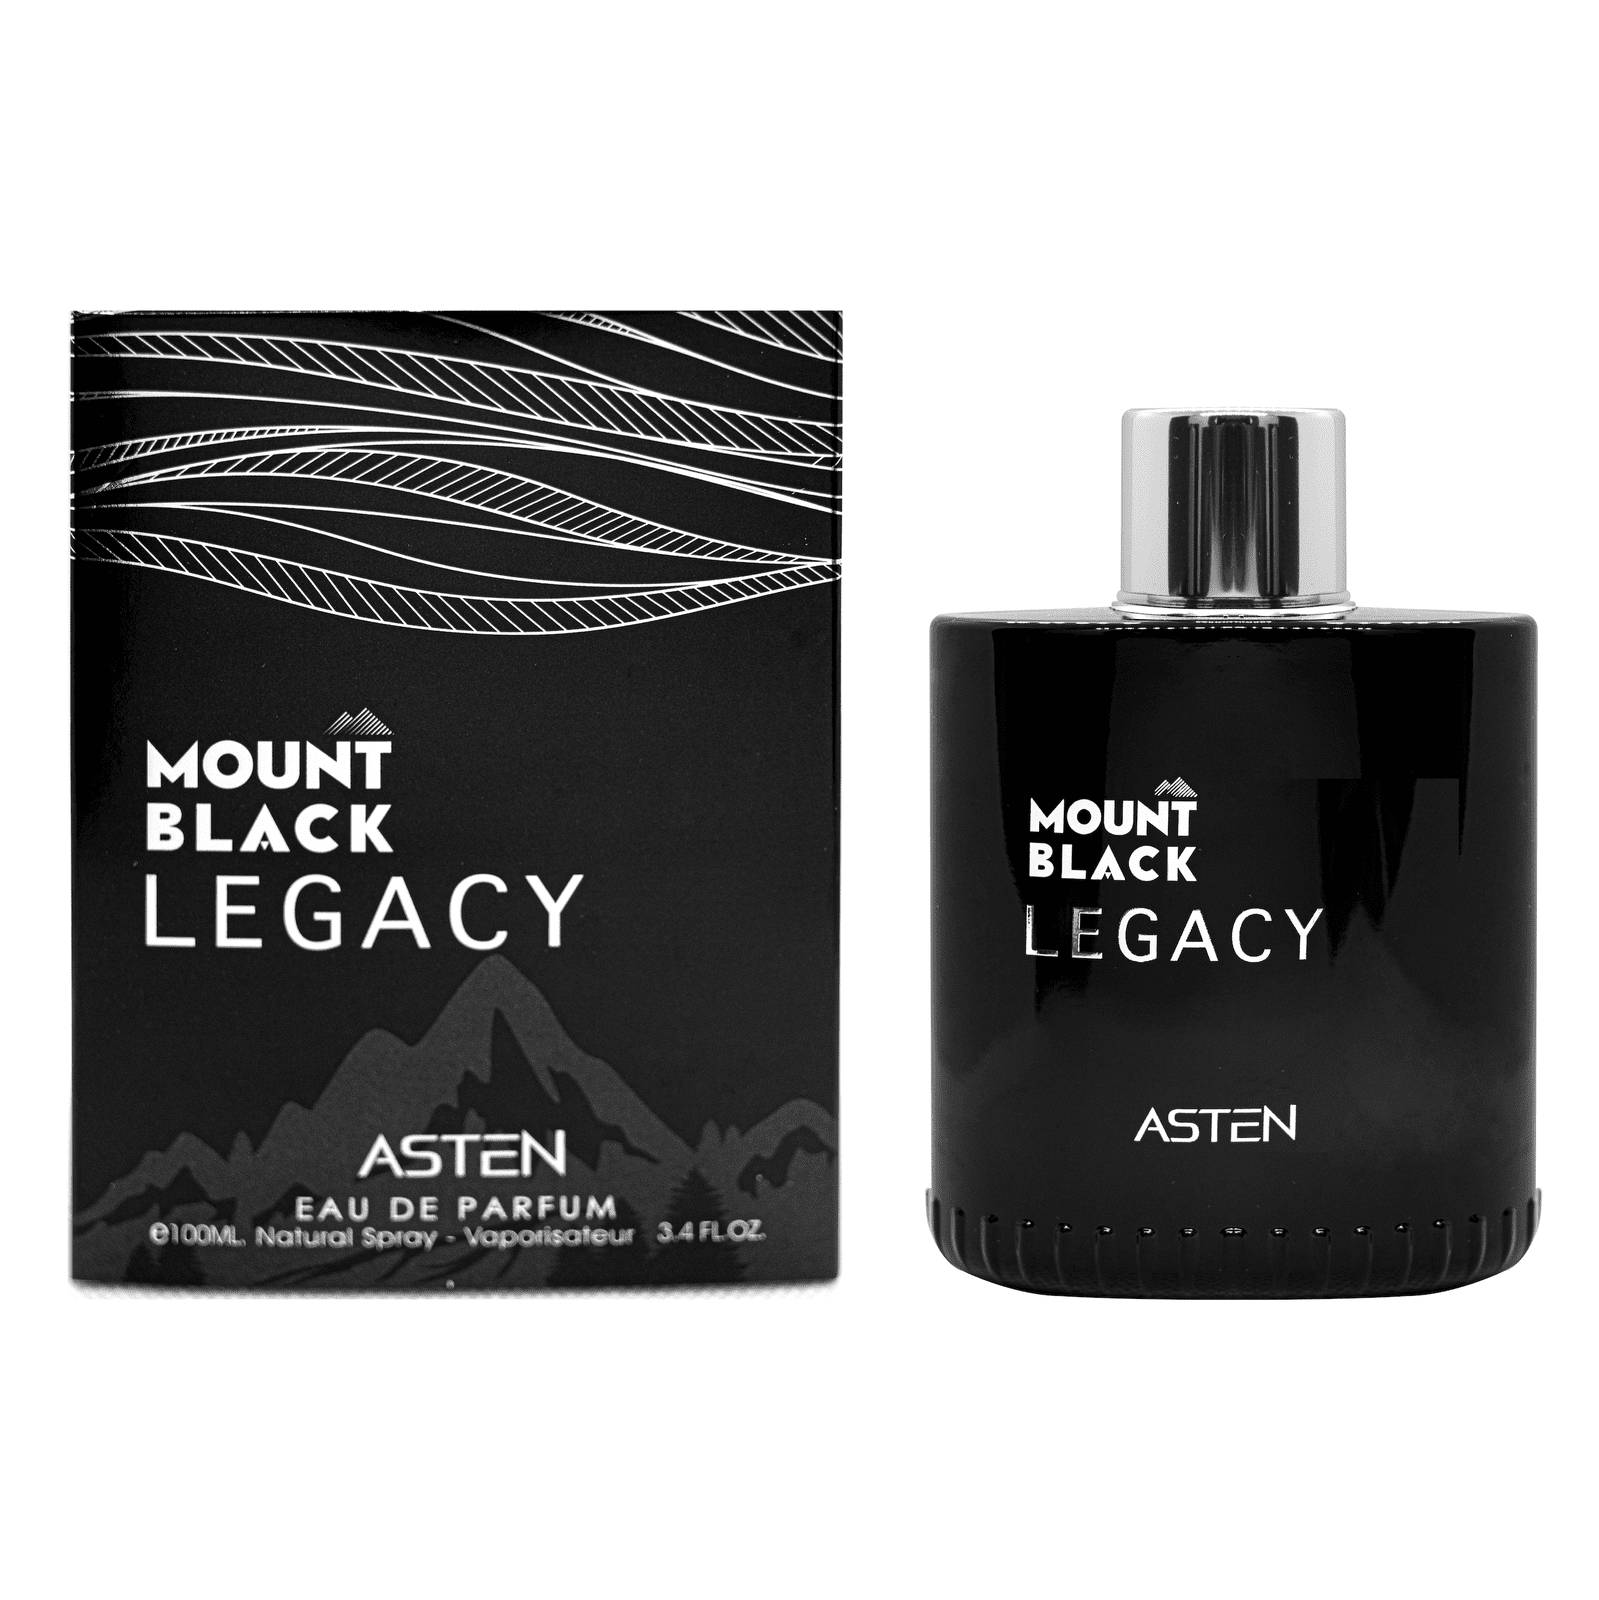 Mount Black Legacy